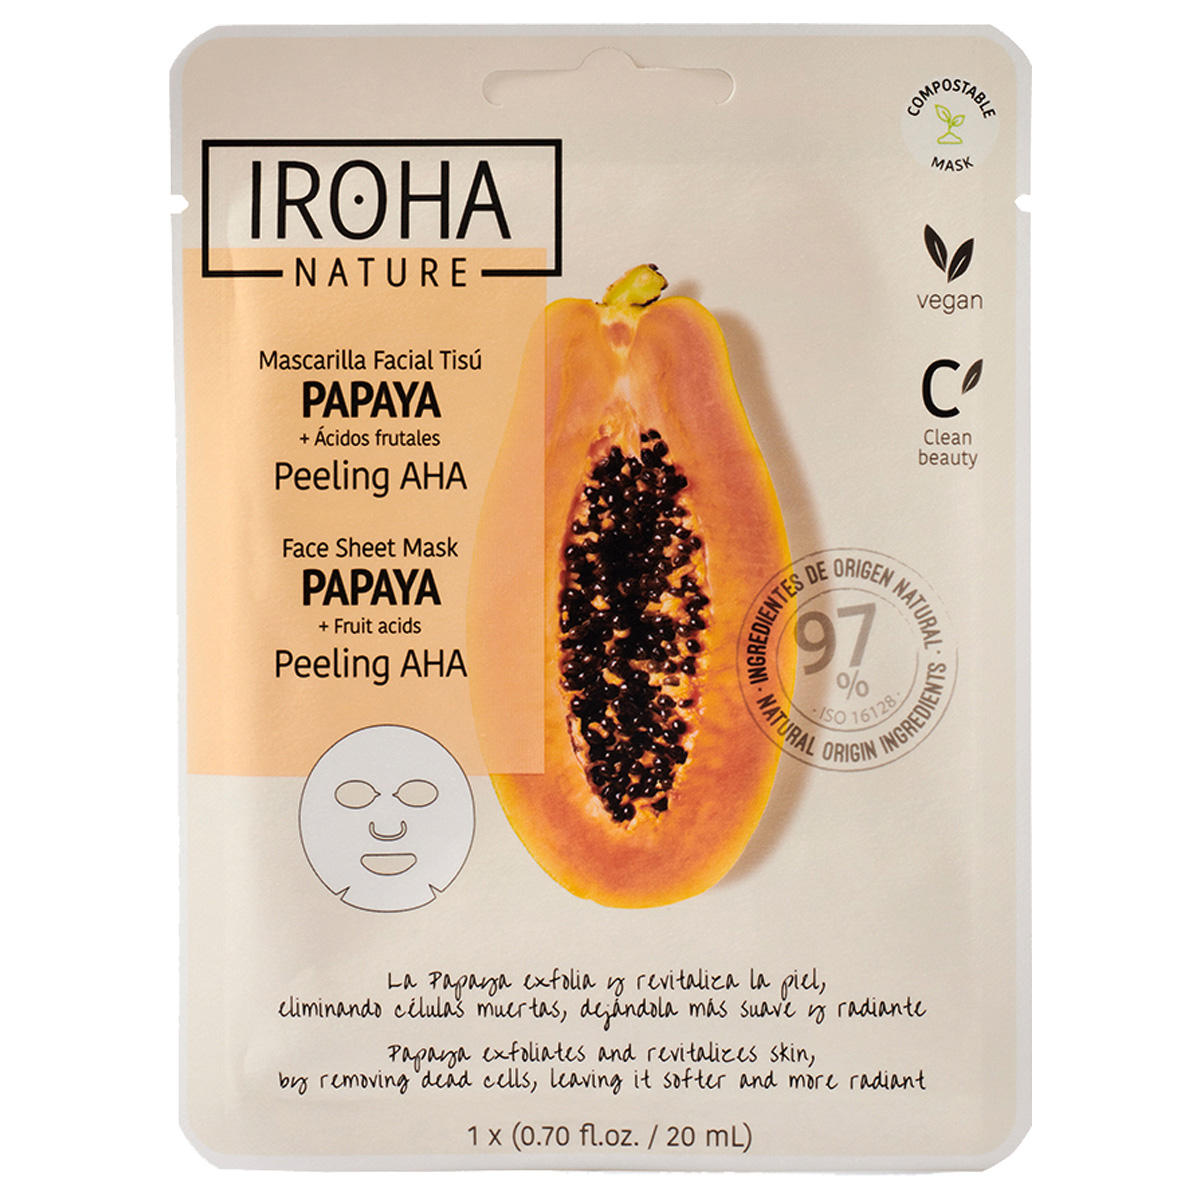 IROHA nature Peeling AHA Mask - Papaya 20 ml - 1